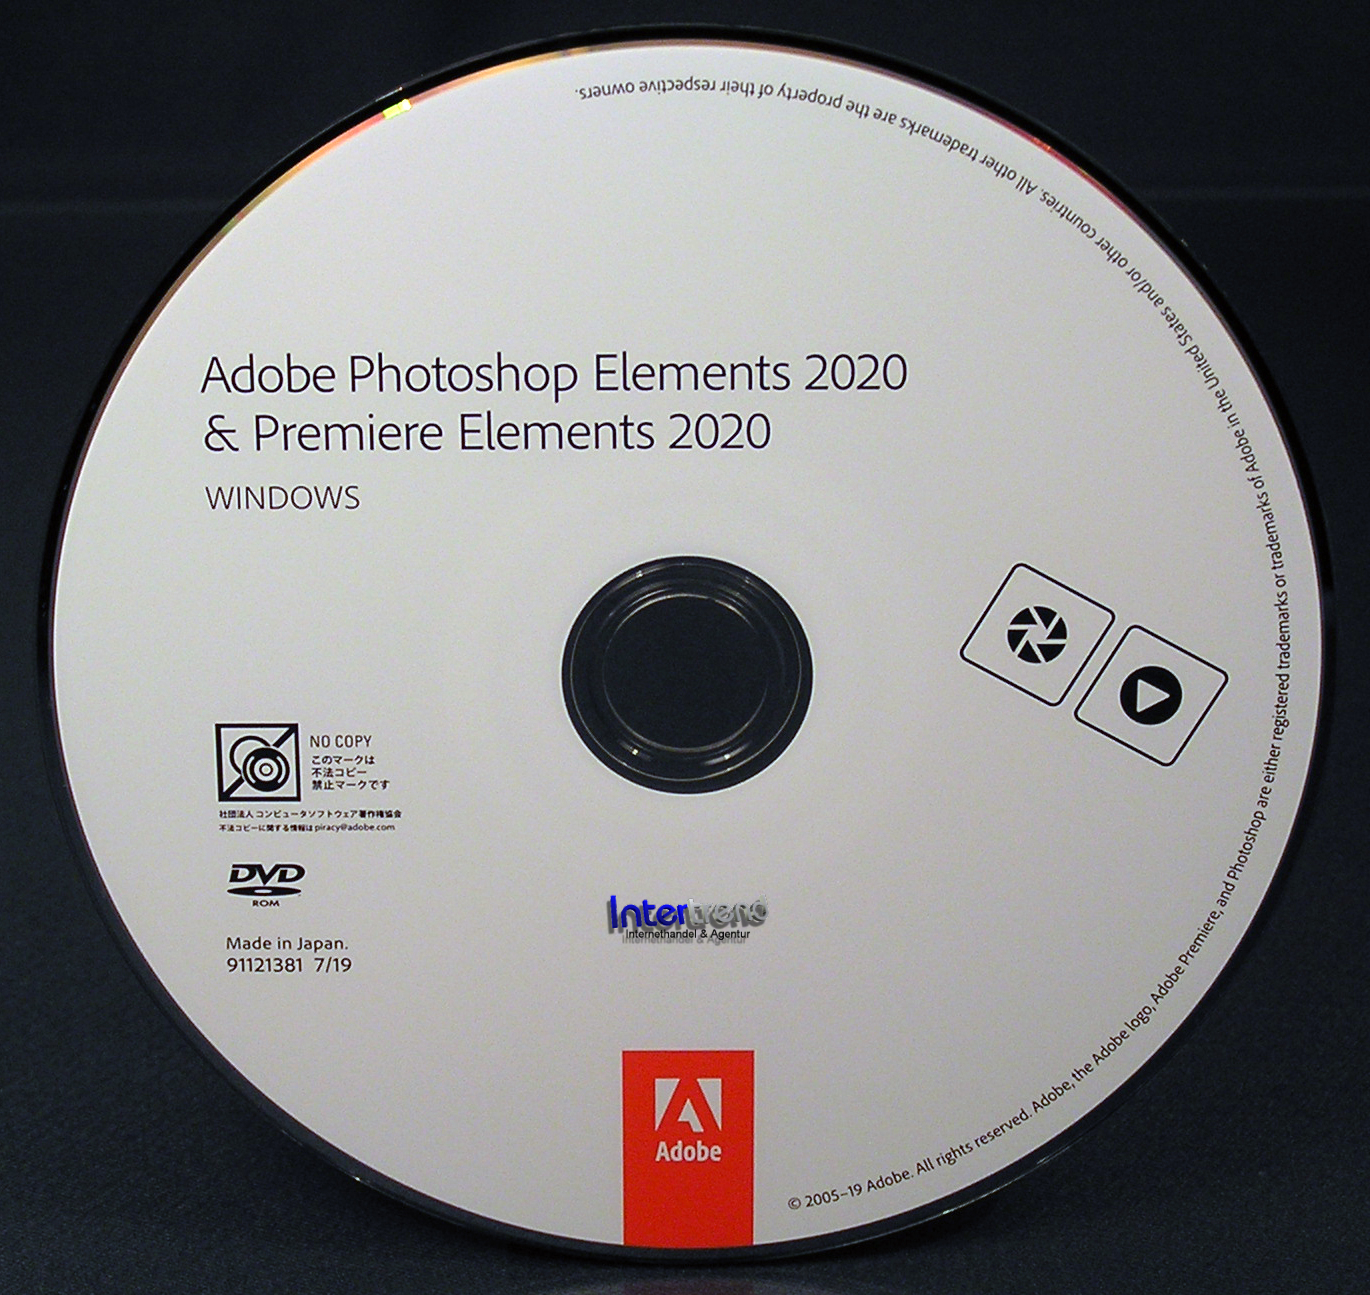 adobe premiere element 2020